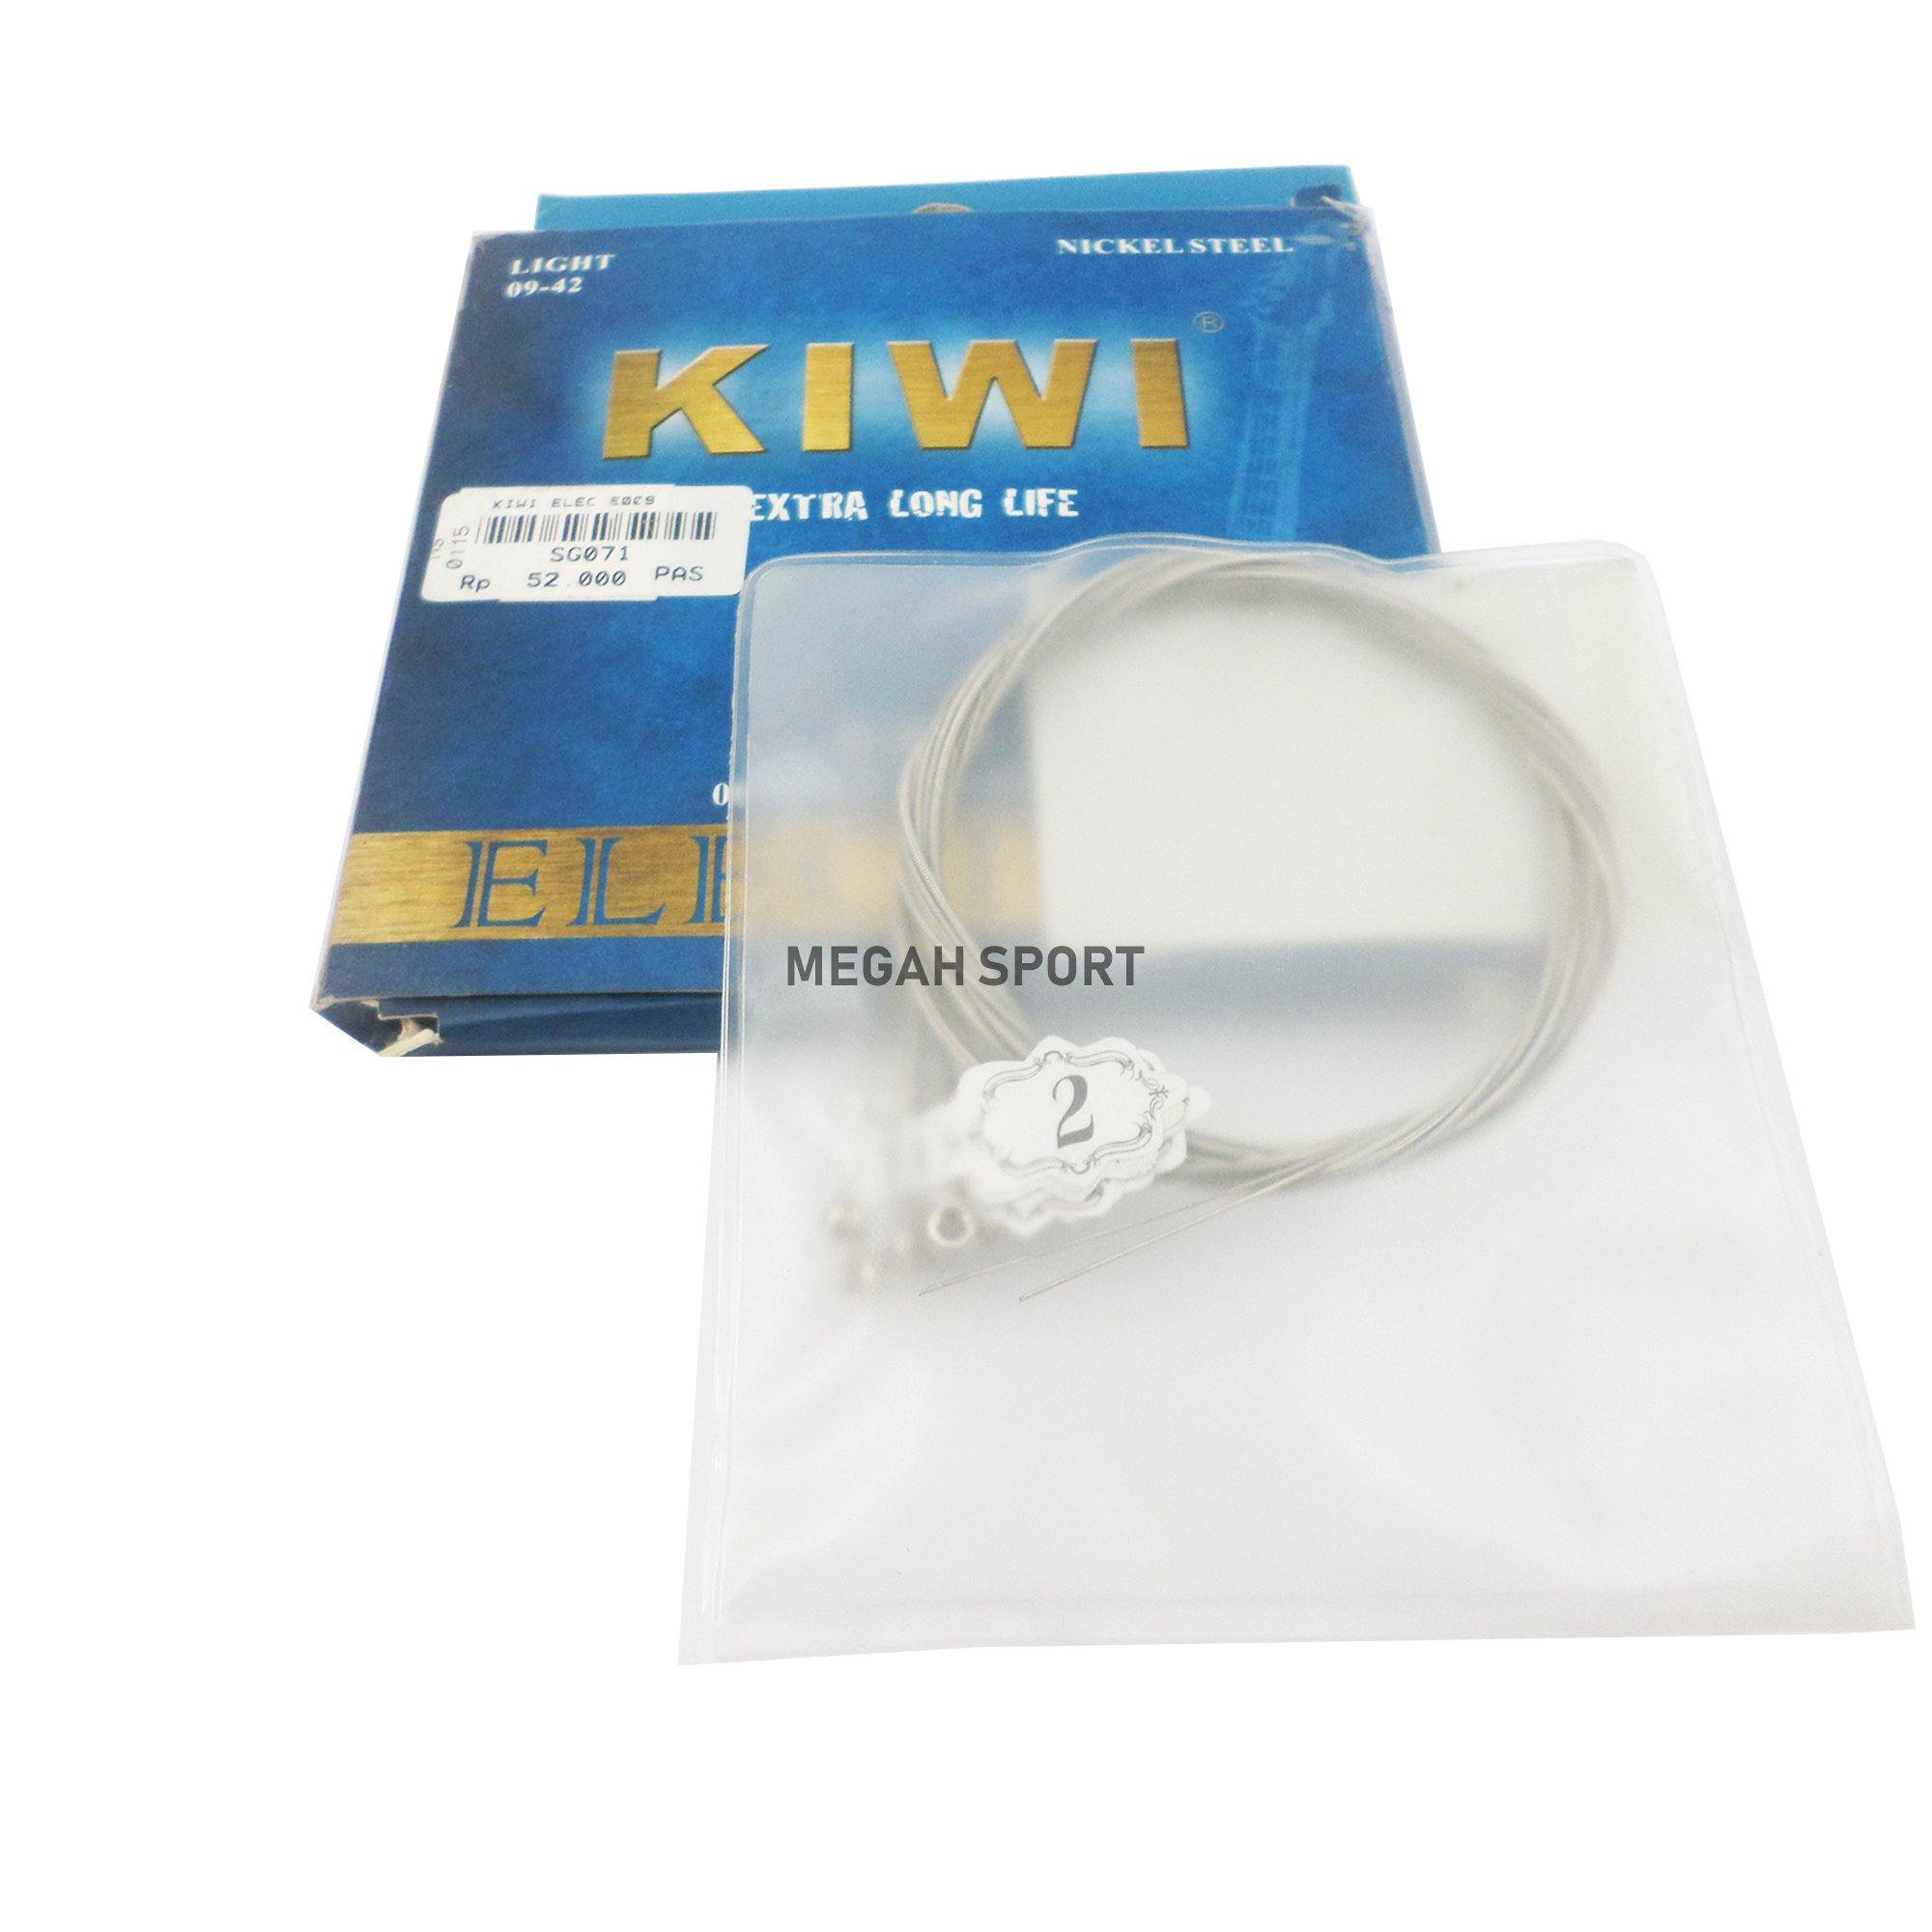 SENAR GITAR KIWI ELECTRIC E-009 (SG071) - Megah Sport